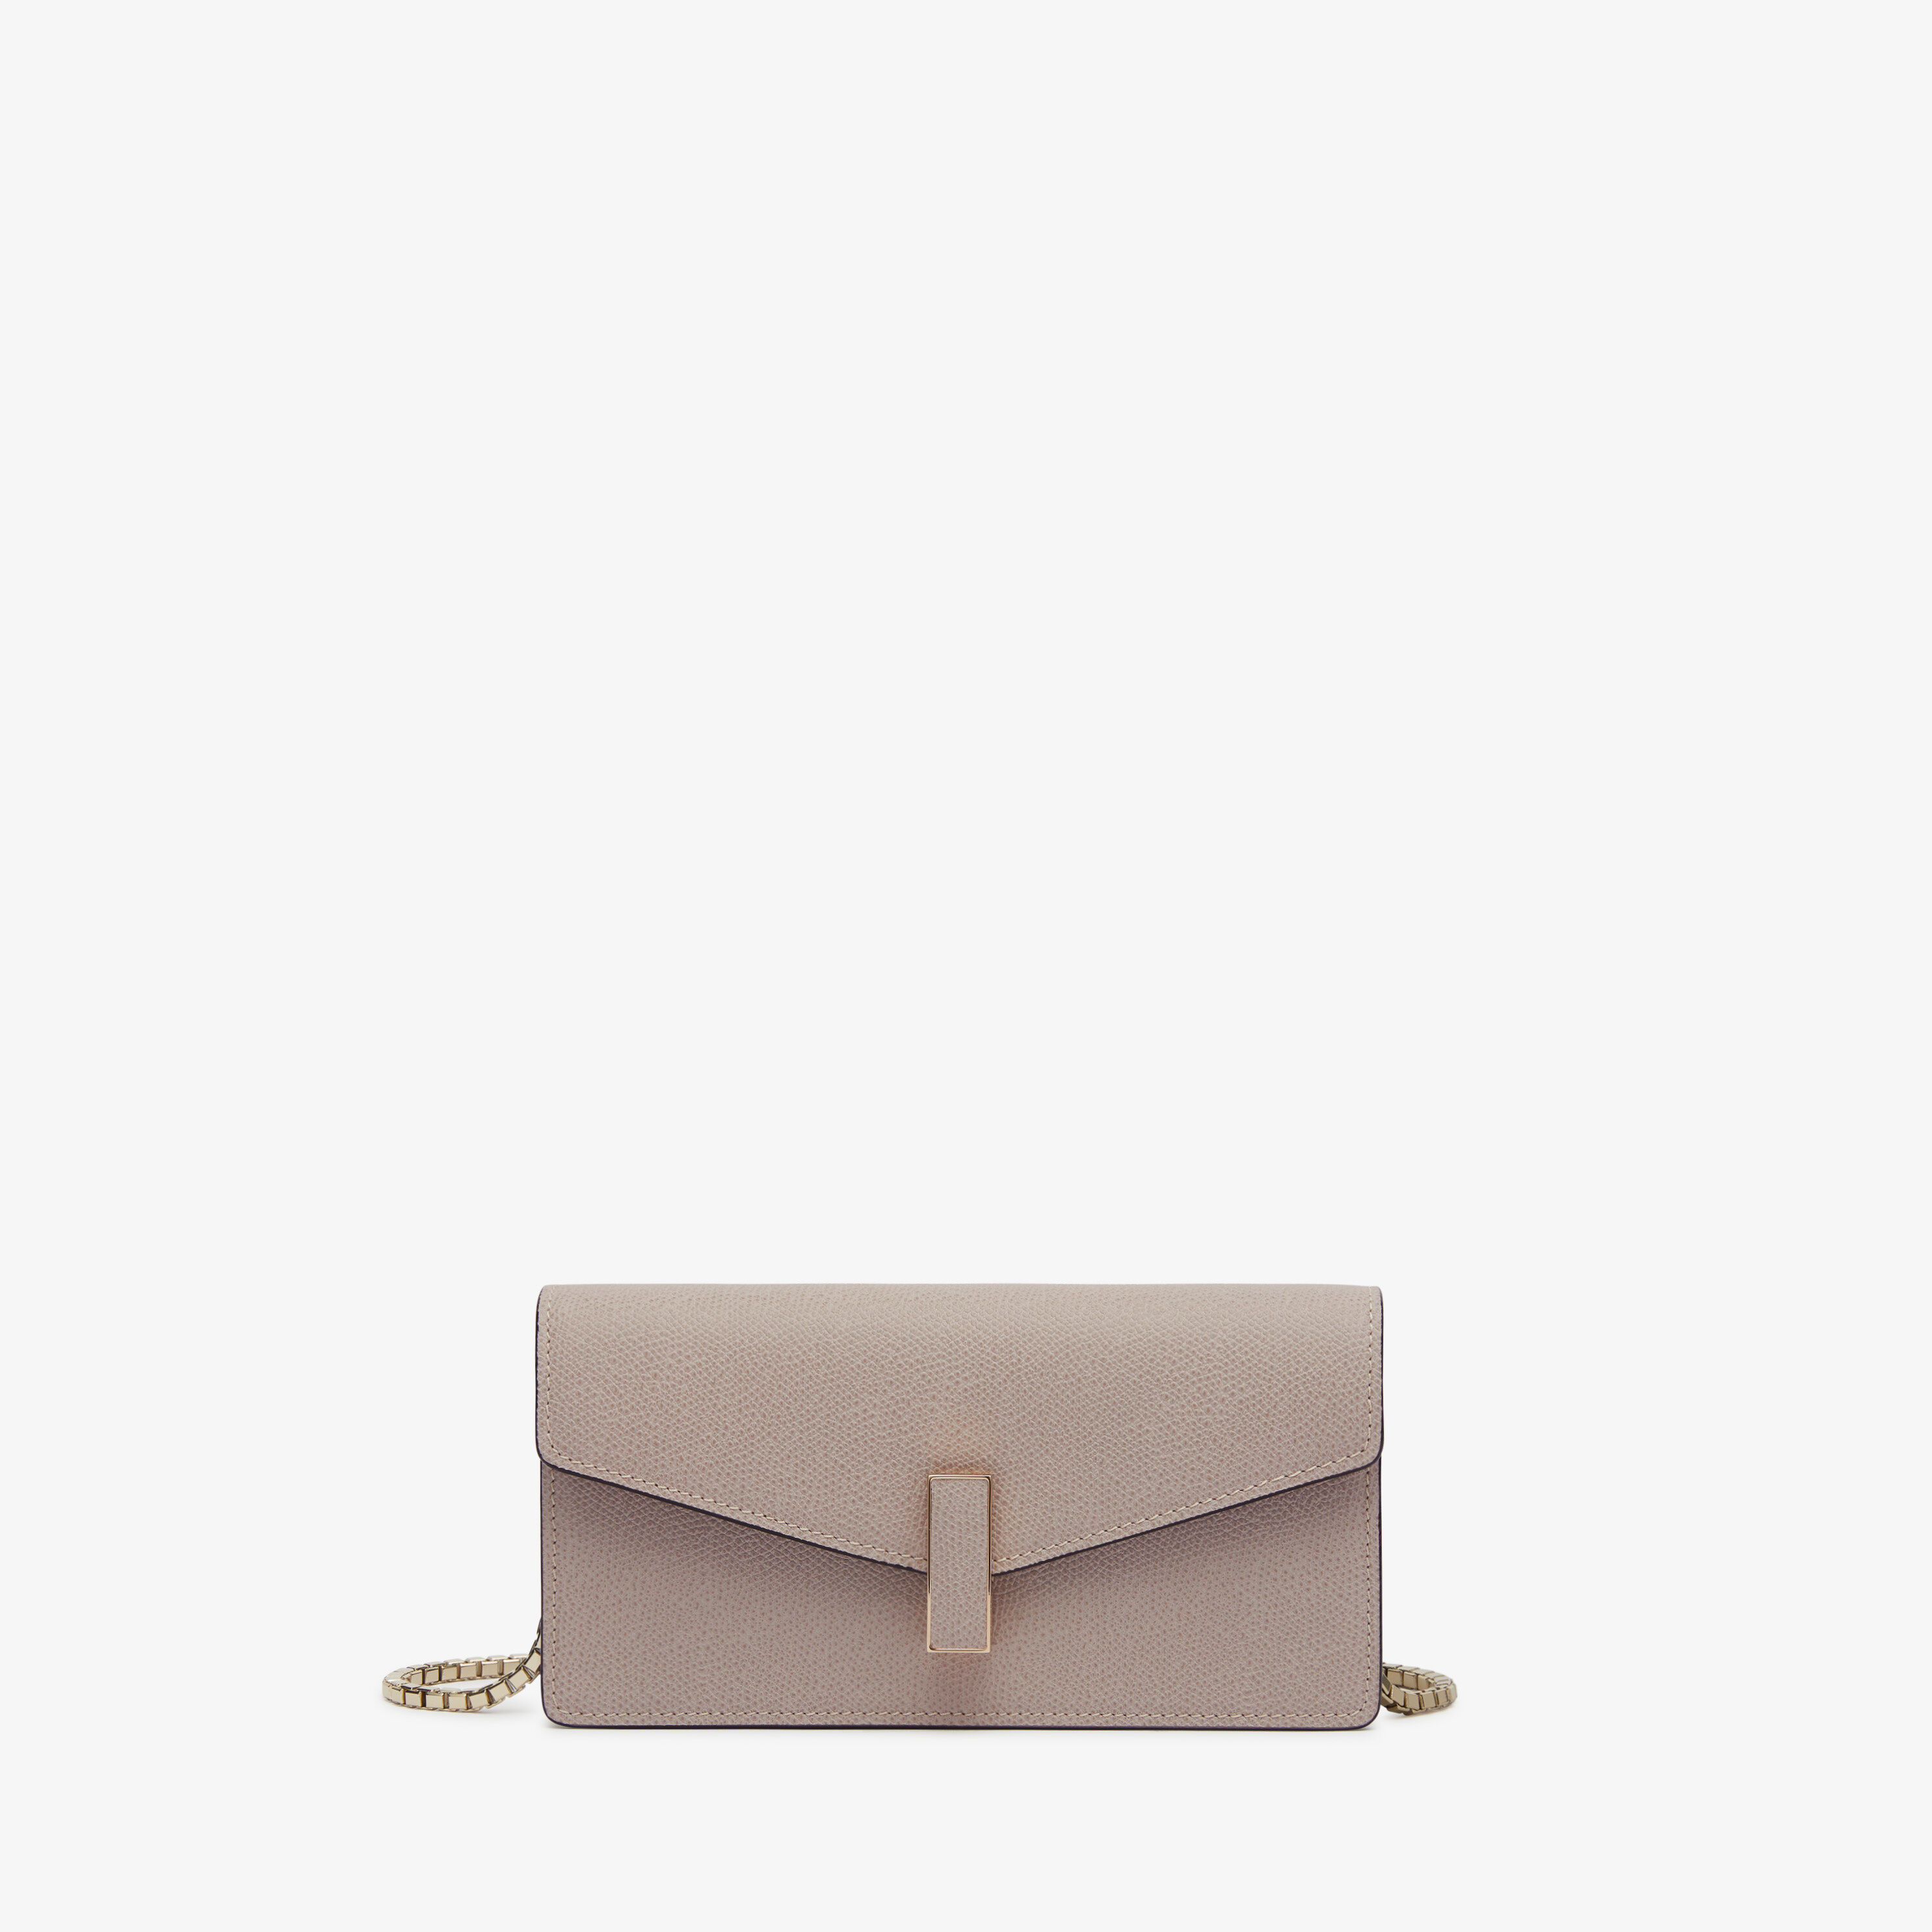 Small bags: designer belt bags, bum bags, clutches | Valextra